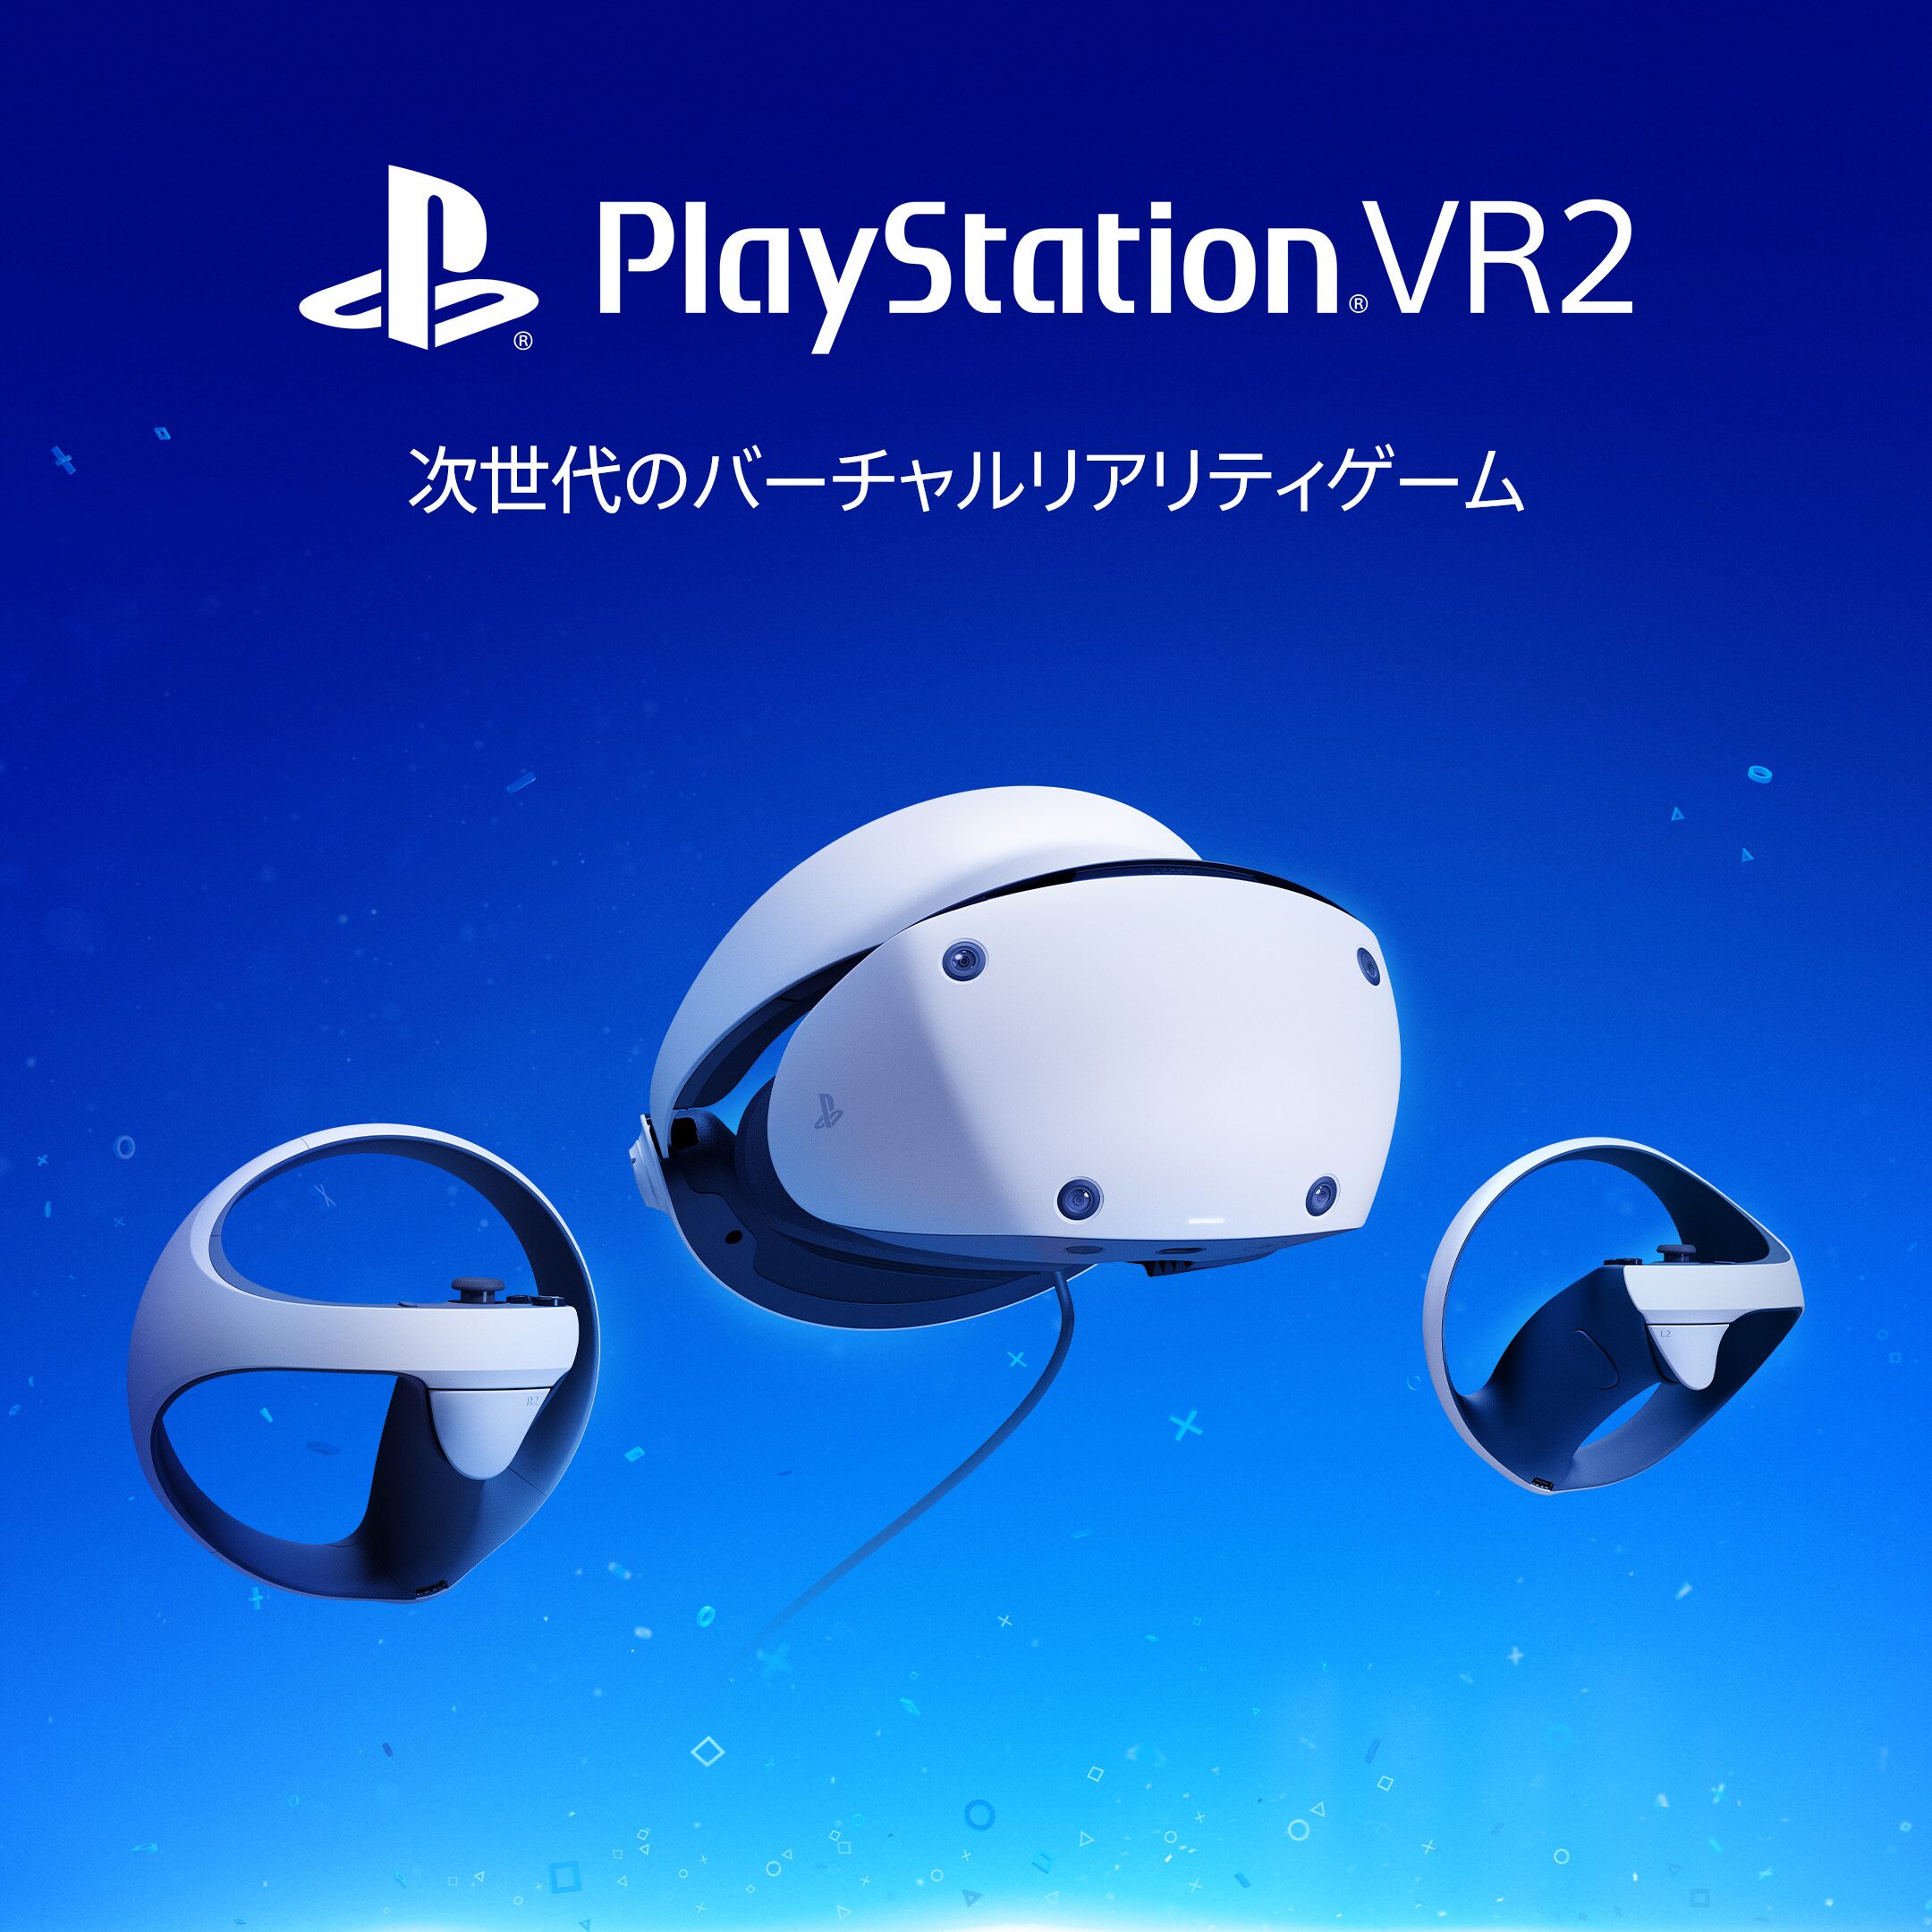 [CRO] PS VR2 Launch - S26